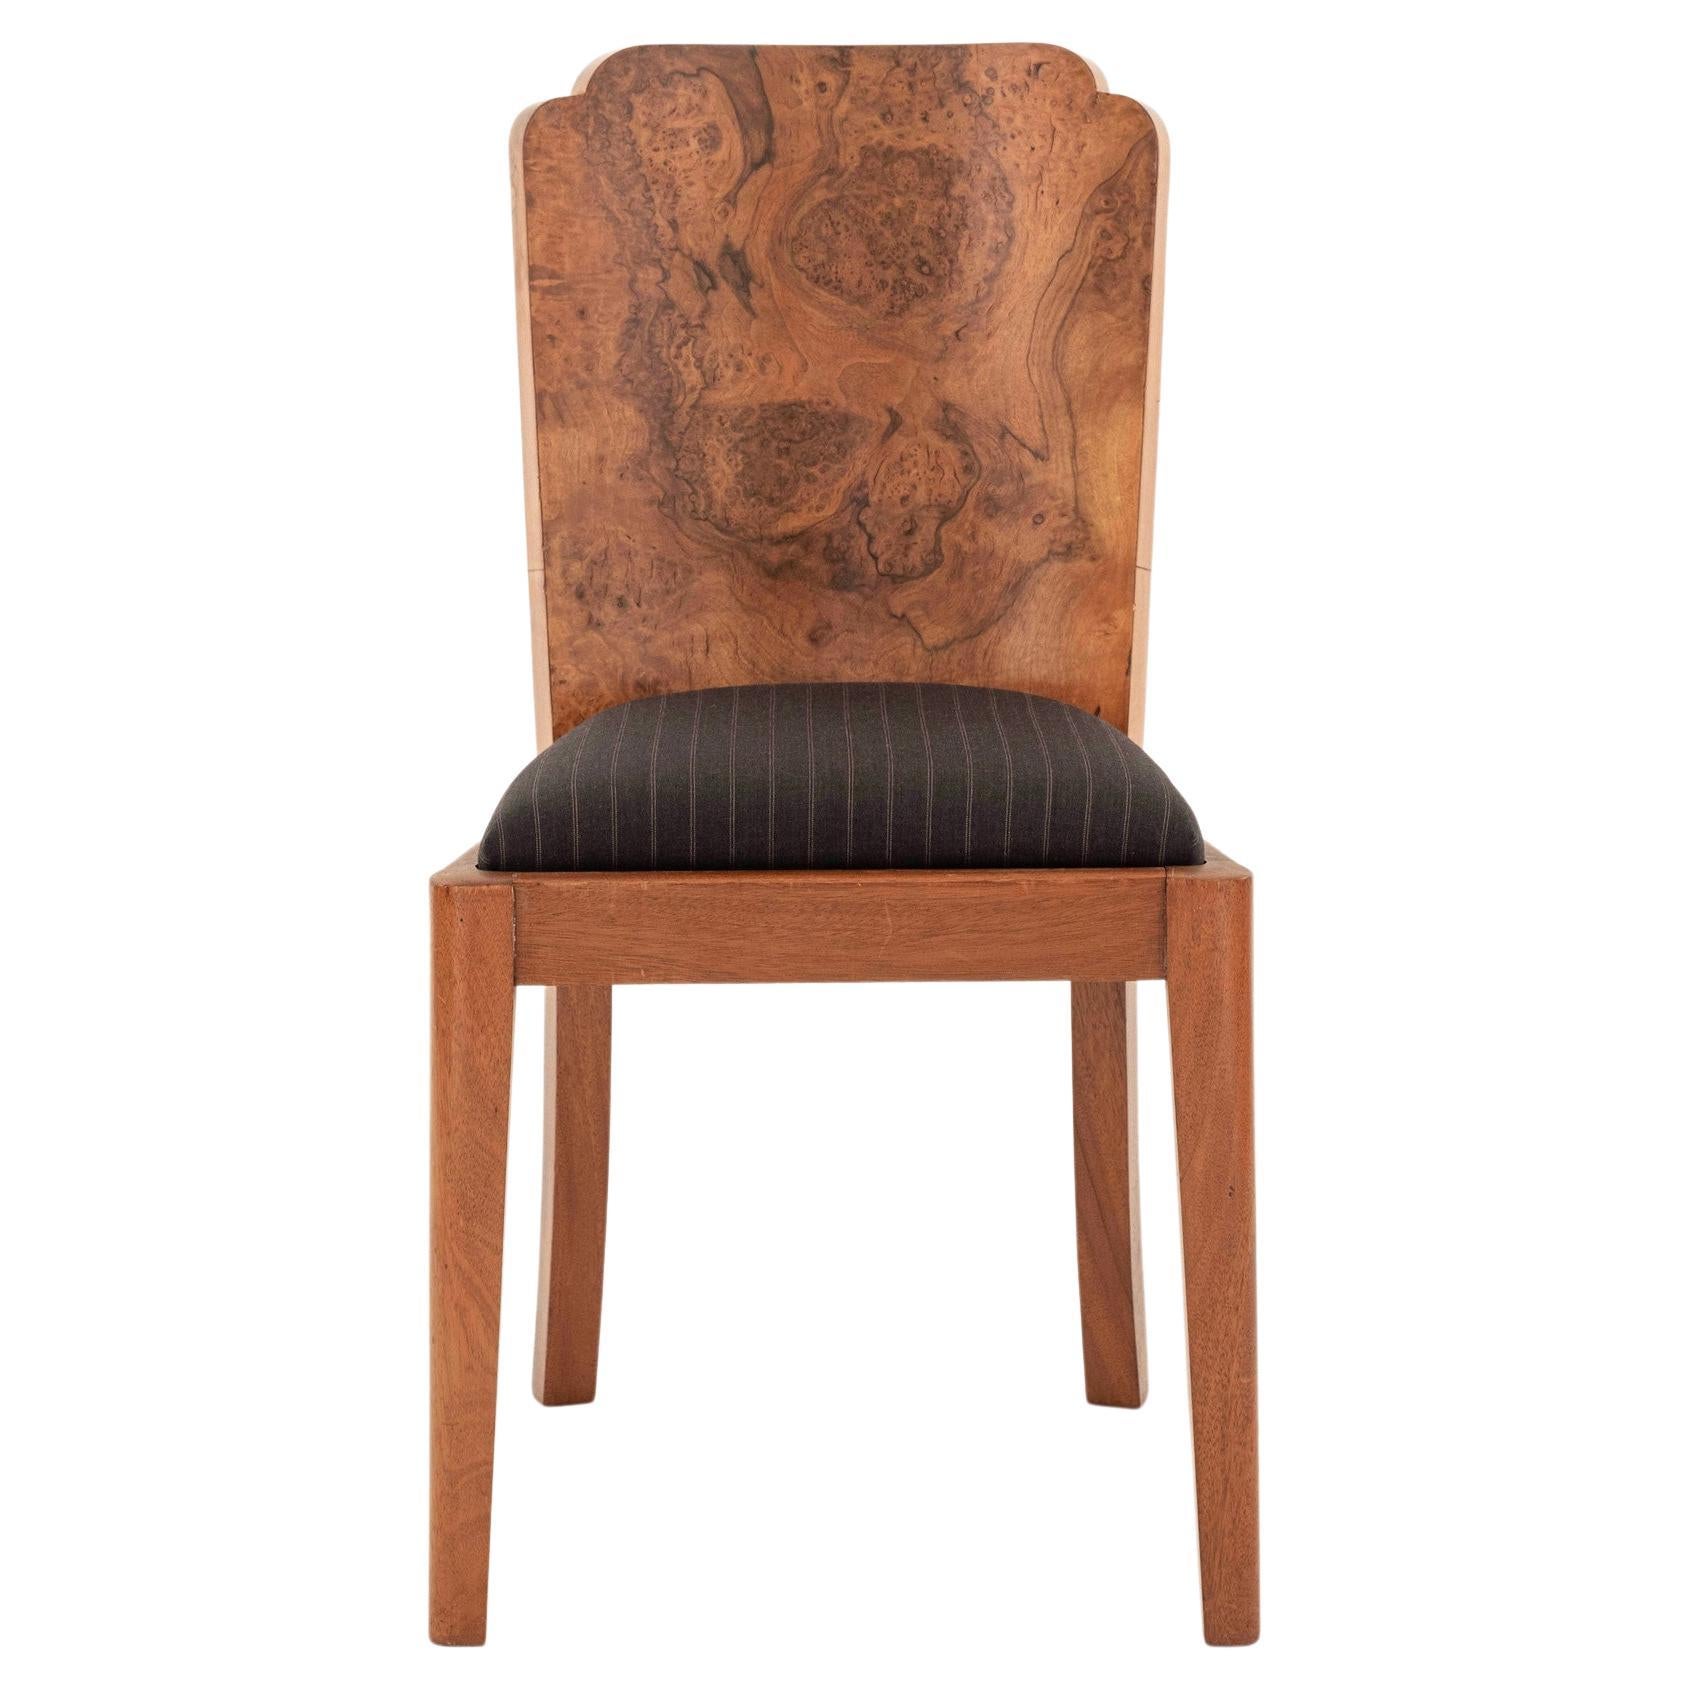 Art Deco Burlwood Chair For Sale